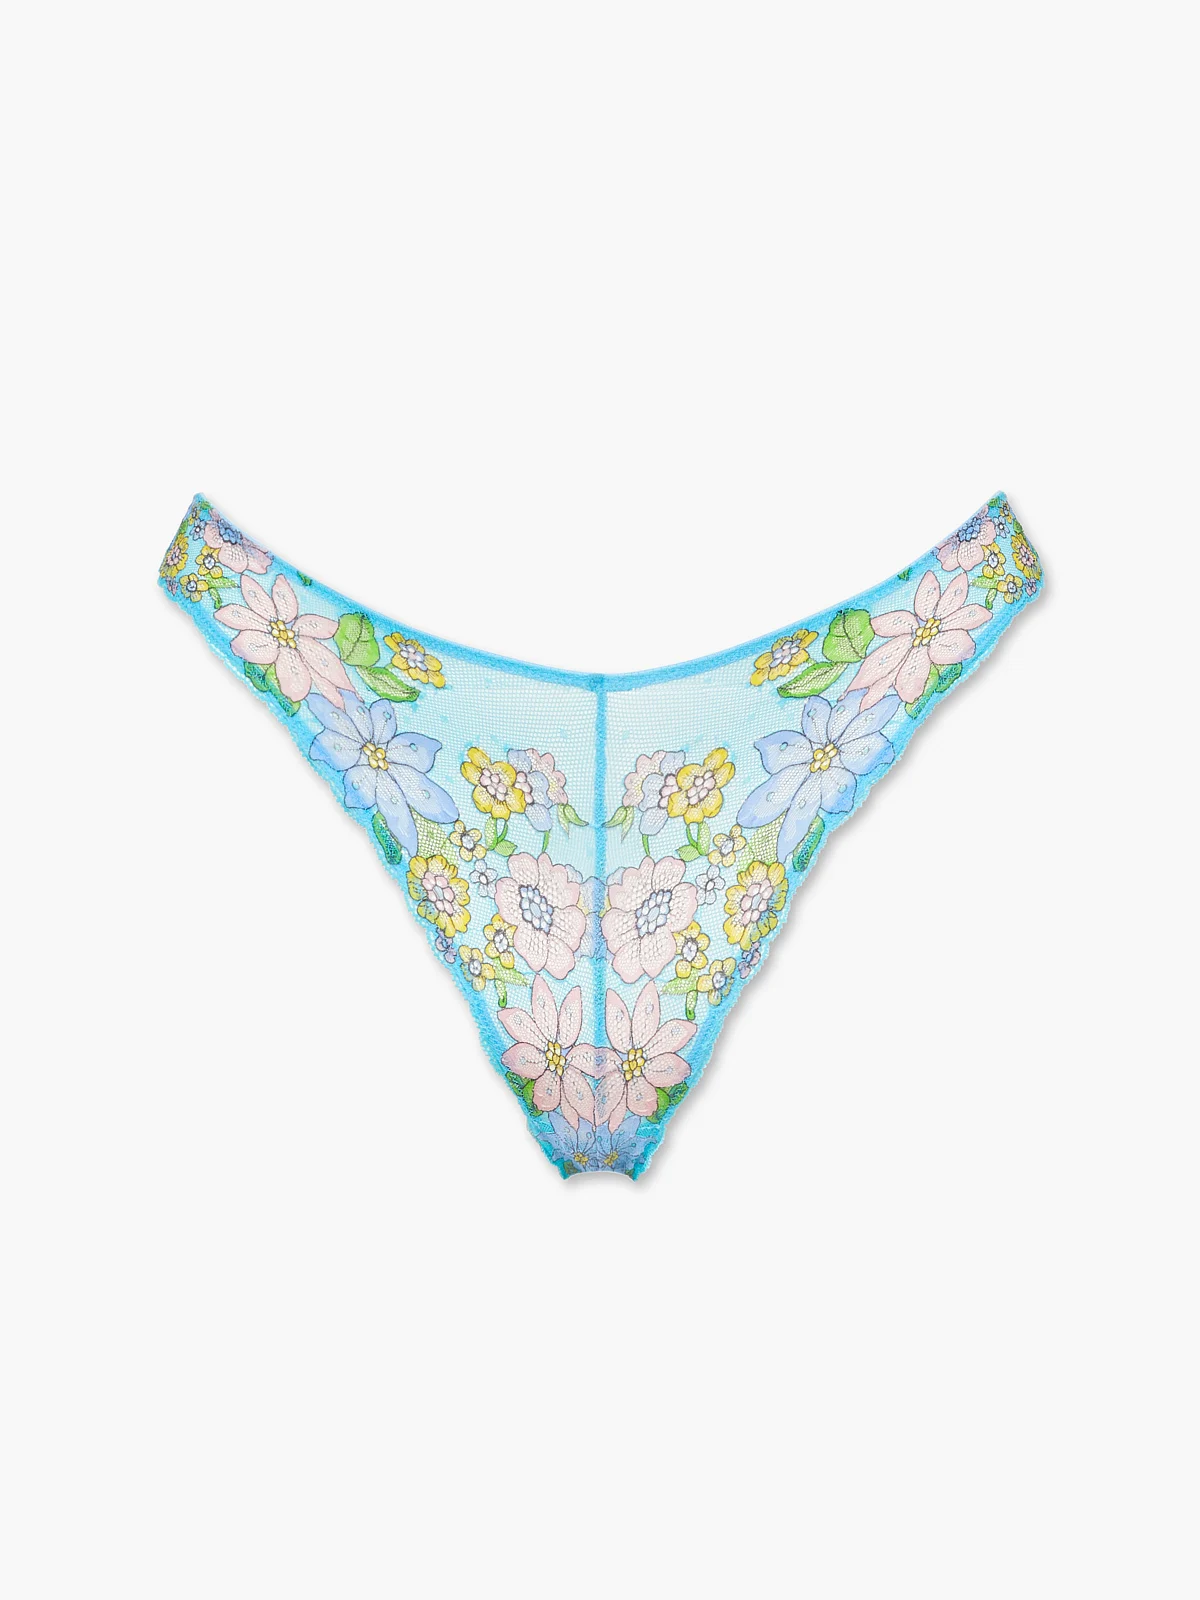 Floral Lace Cheekini Panty | Victoria's Secret Australia